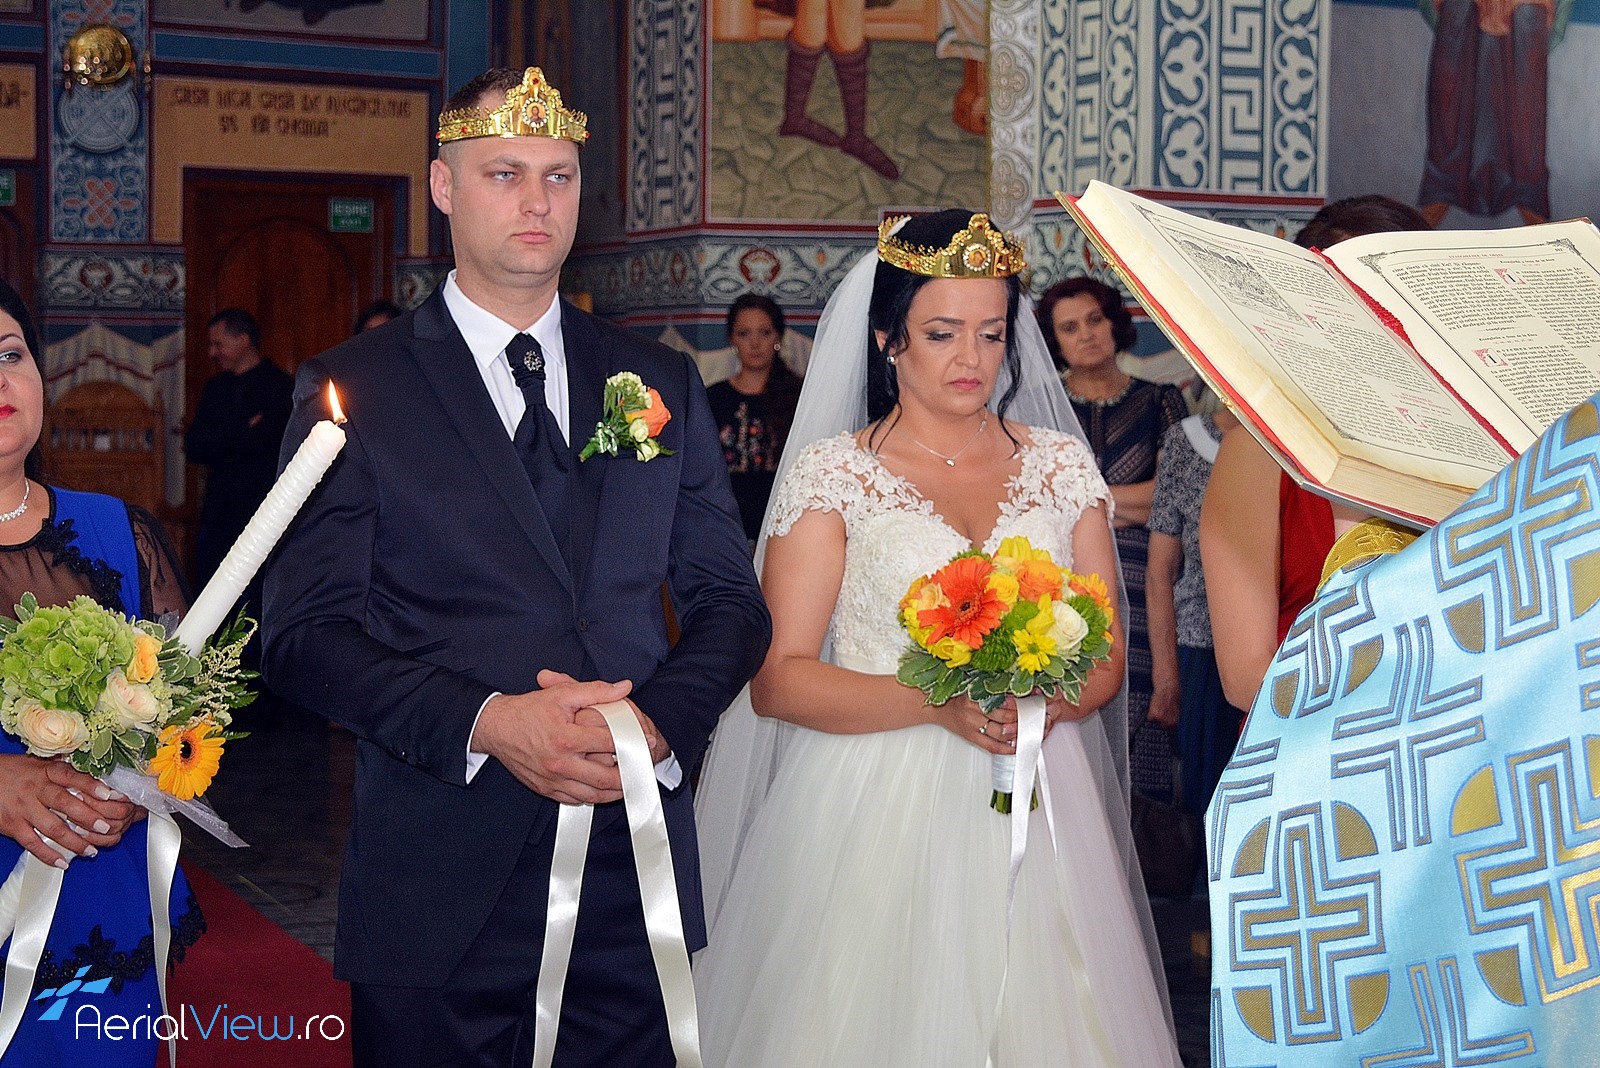 Fotografii nunti Cluj-Napoca, Ana Maria & Andrei